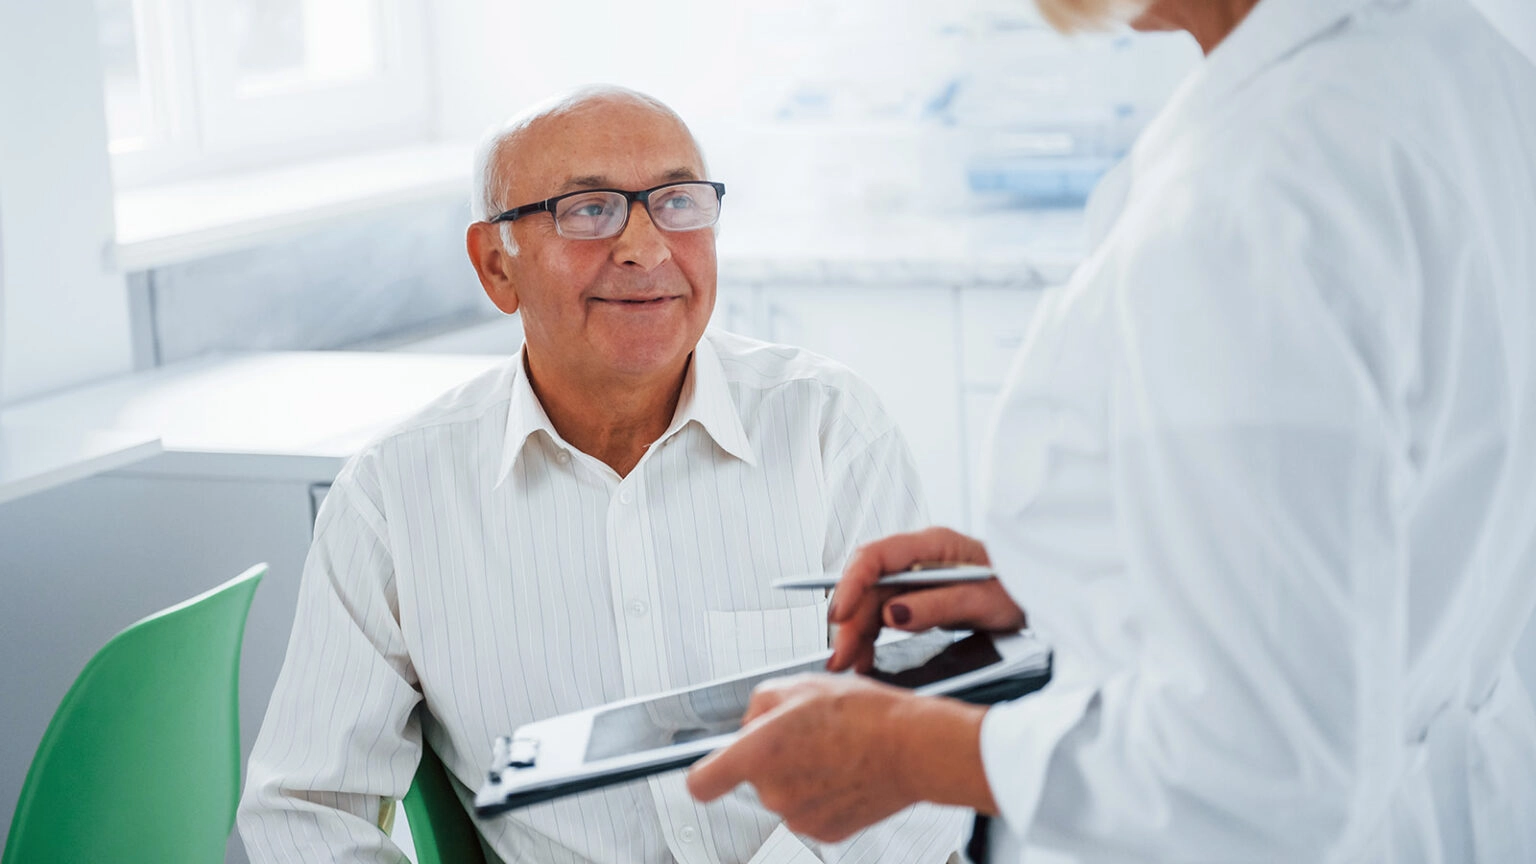 Treatment Options for Prostate Cancer in Older Men